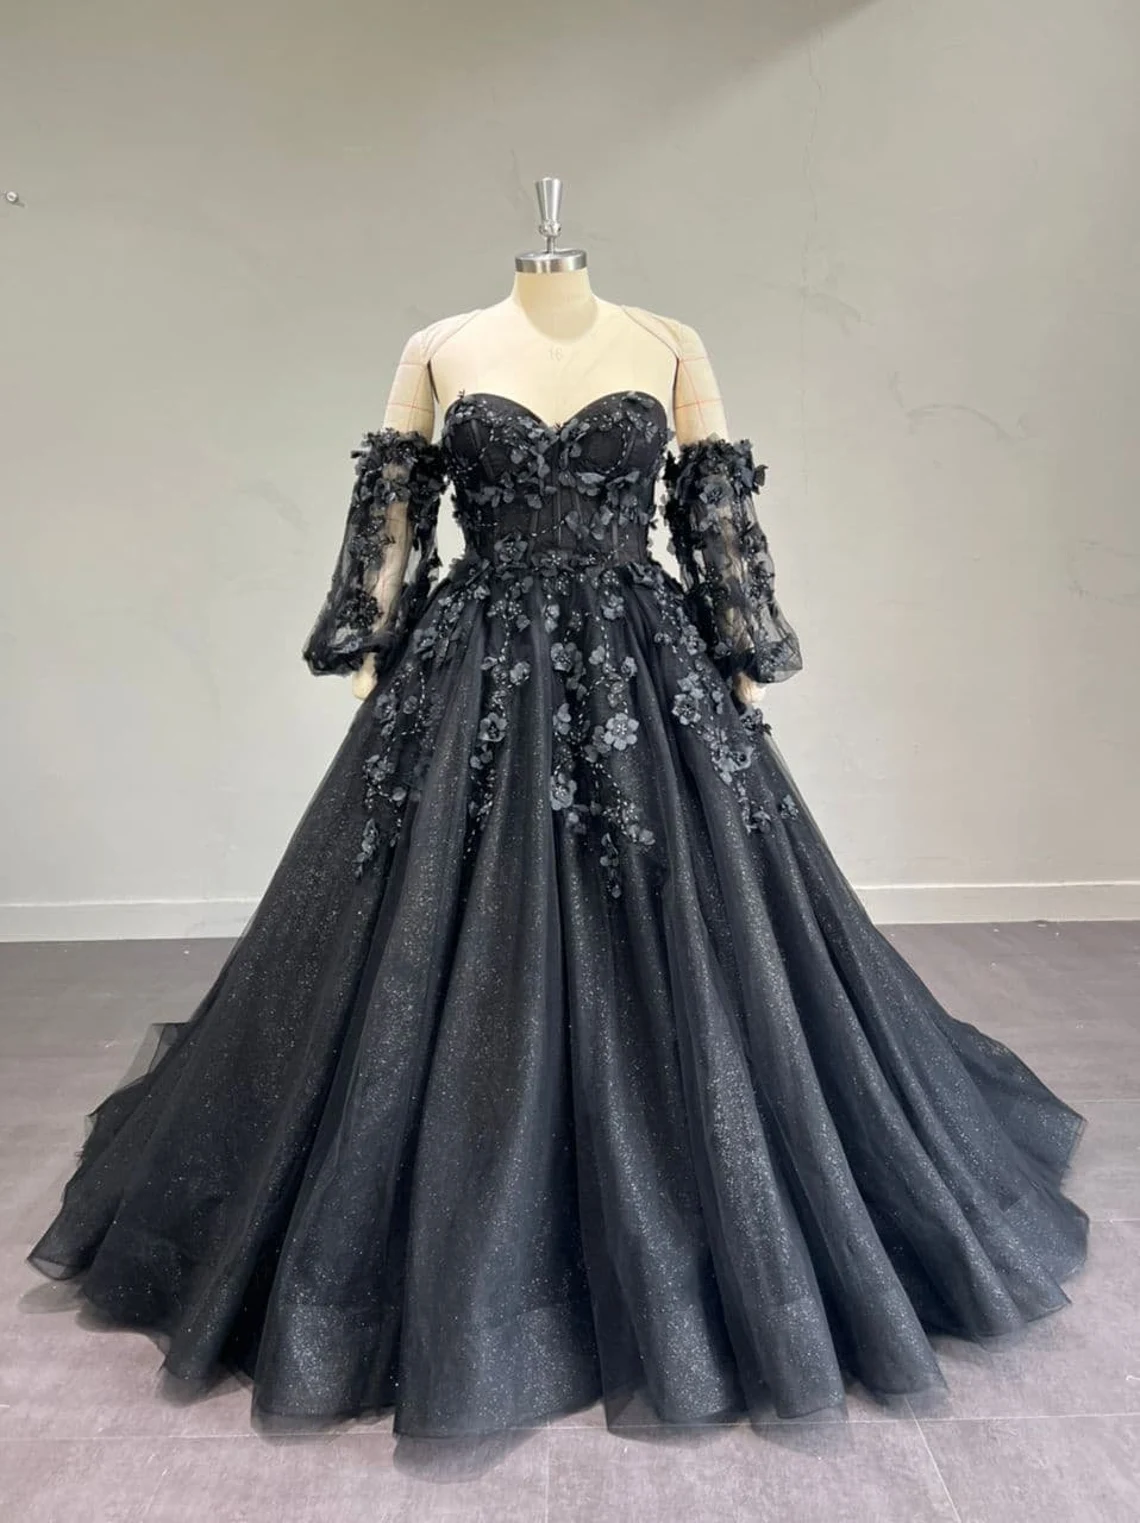 Fuchsia Long Gothic Ball Gown Prom Dress D1030 - D-RoseBlooming